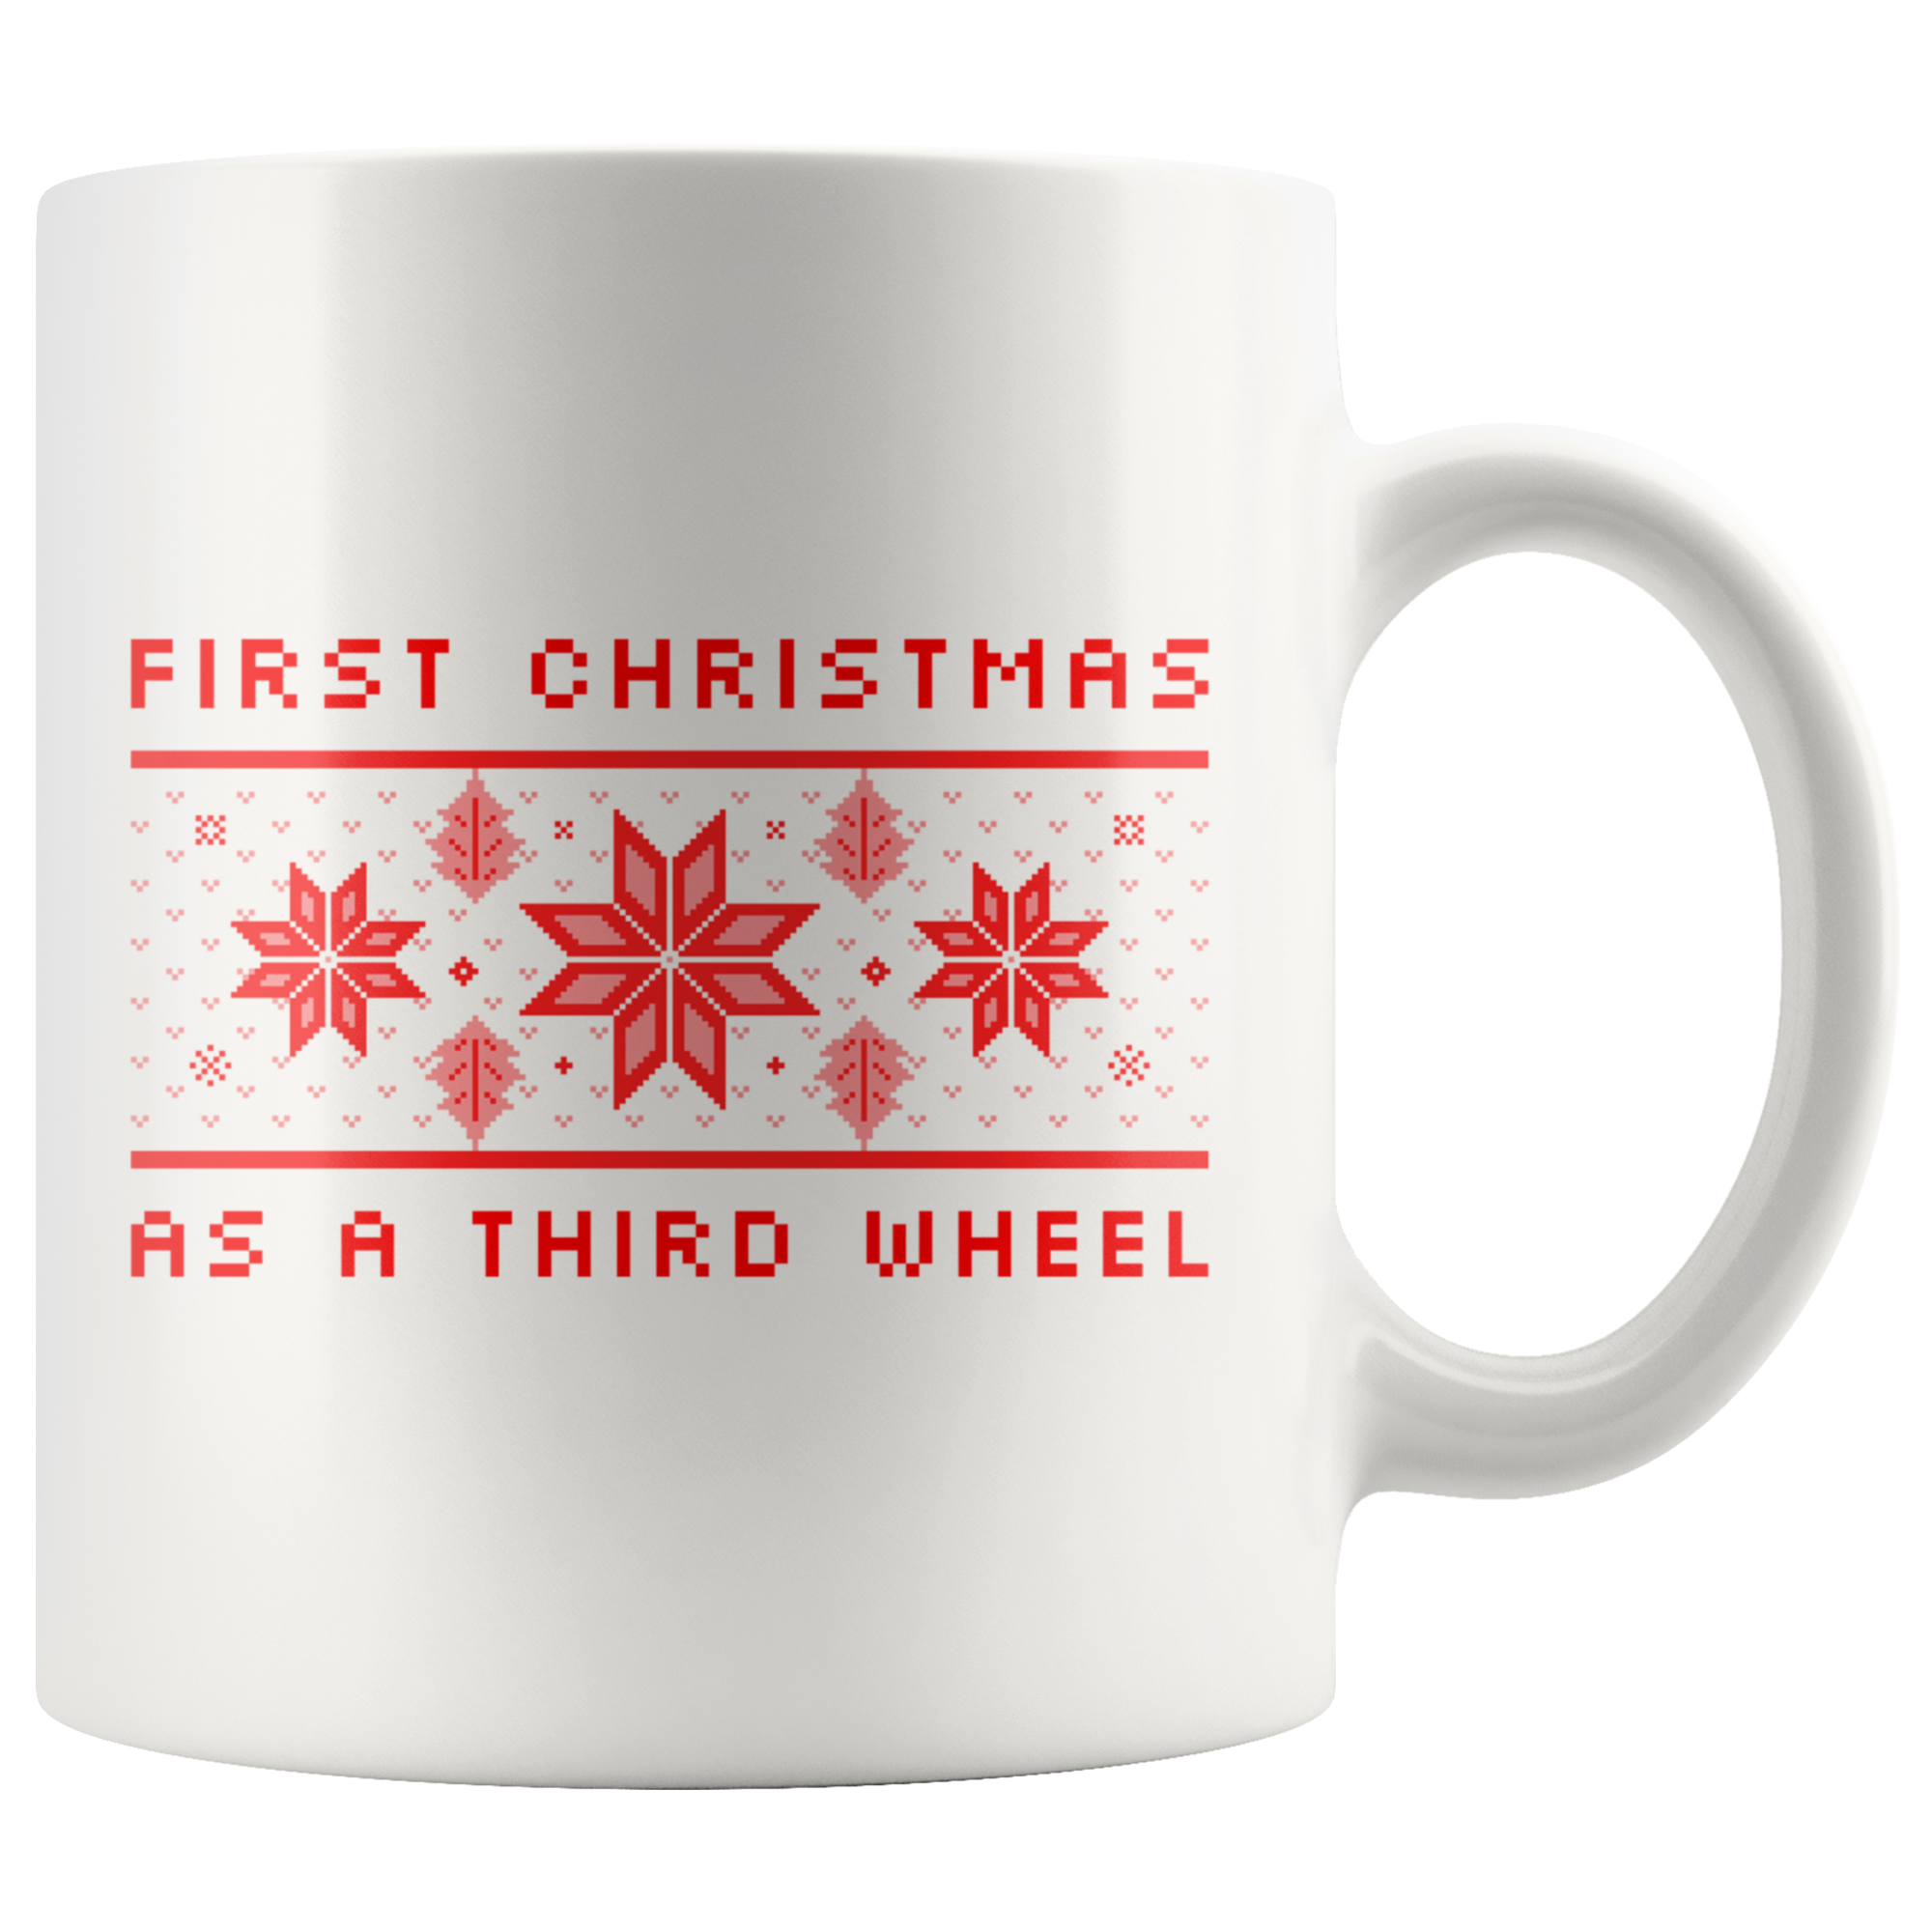 First Christmas as 3rd Wheel Mug - Guestbookery